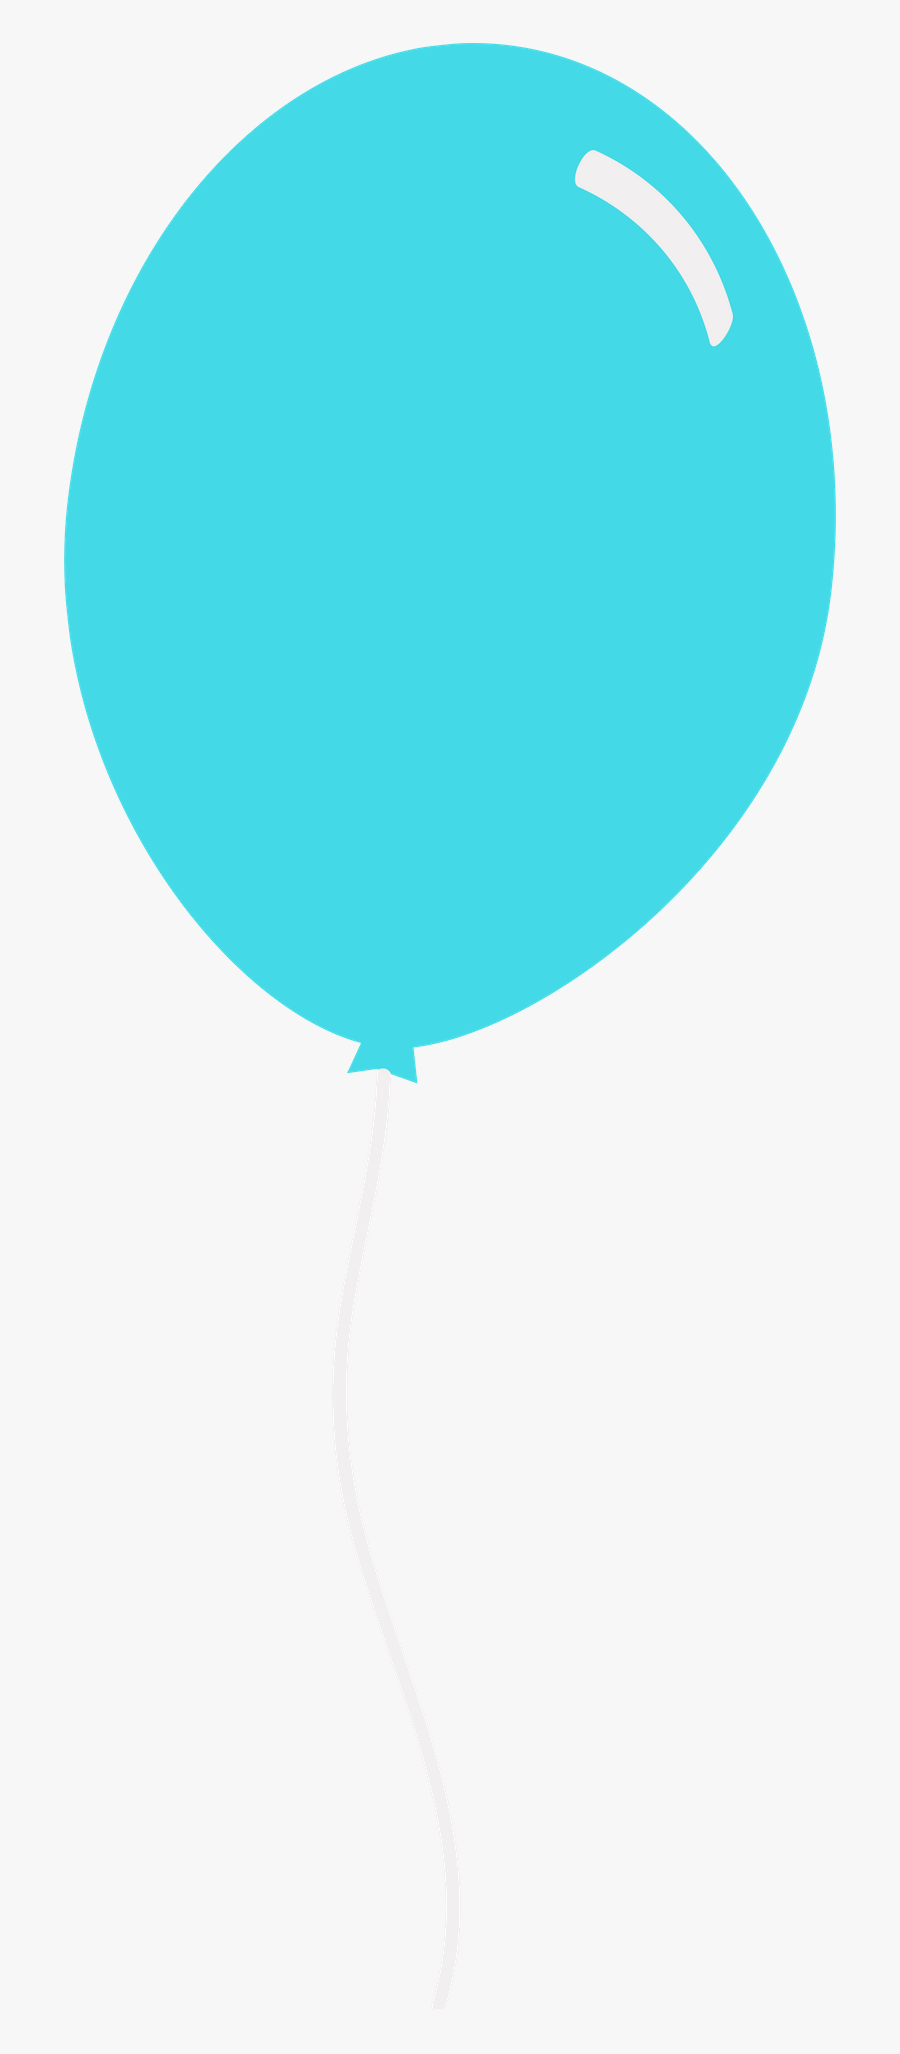 Cyan Balloon Free Download - Balloon, Transparent Clipart